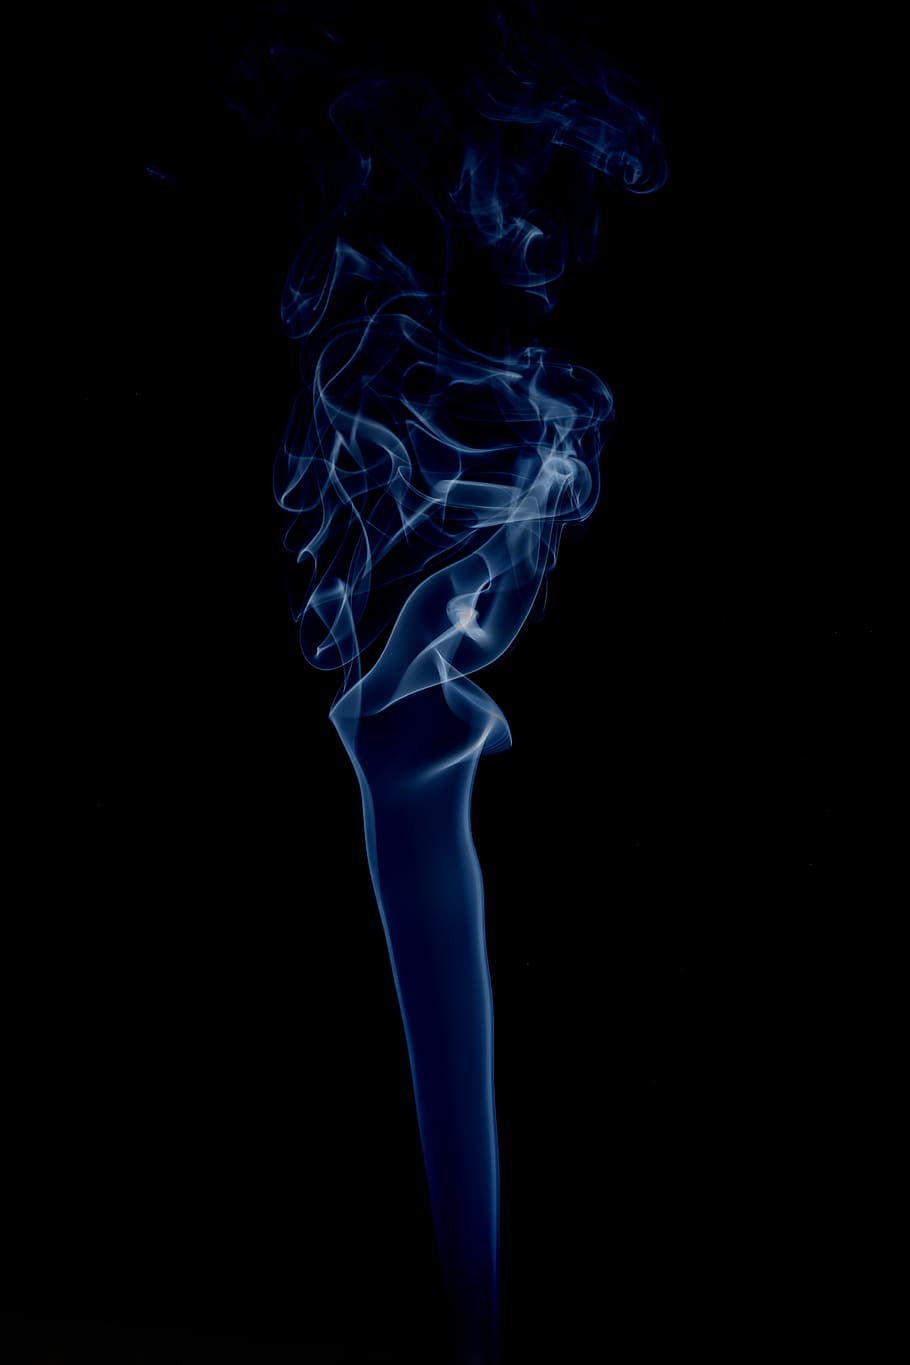 smoke, fire, burning, lighter, flame, incense, smoke - physical structure, studio shot, black background, indoors